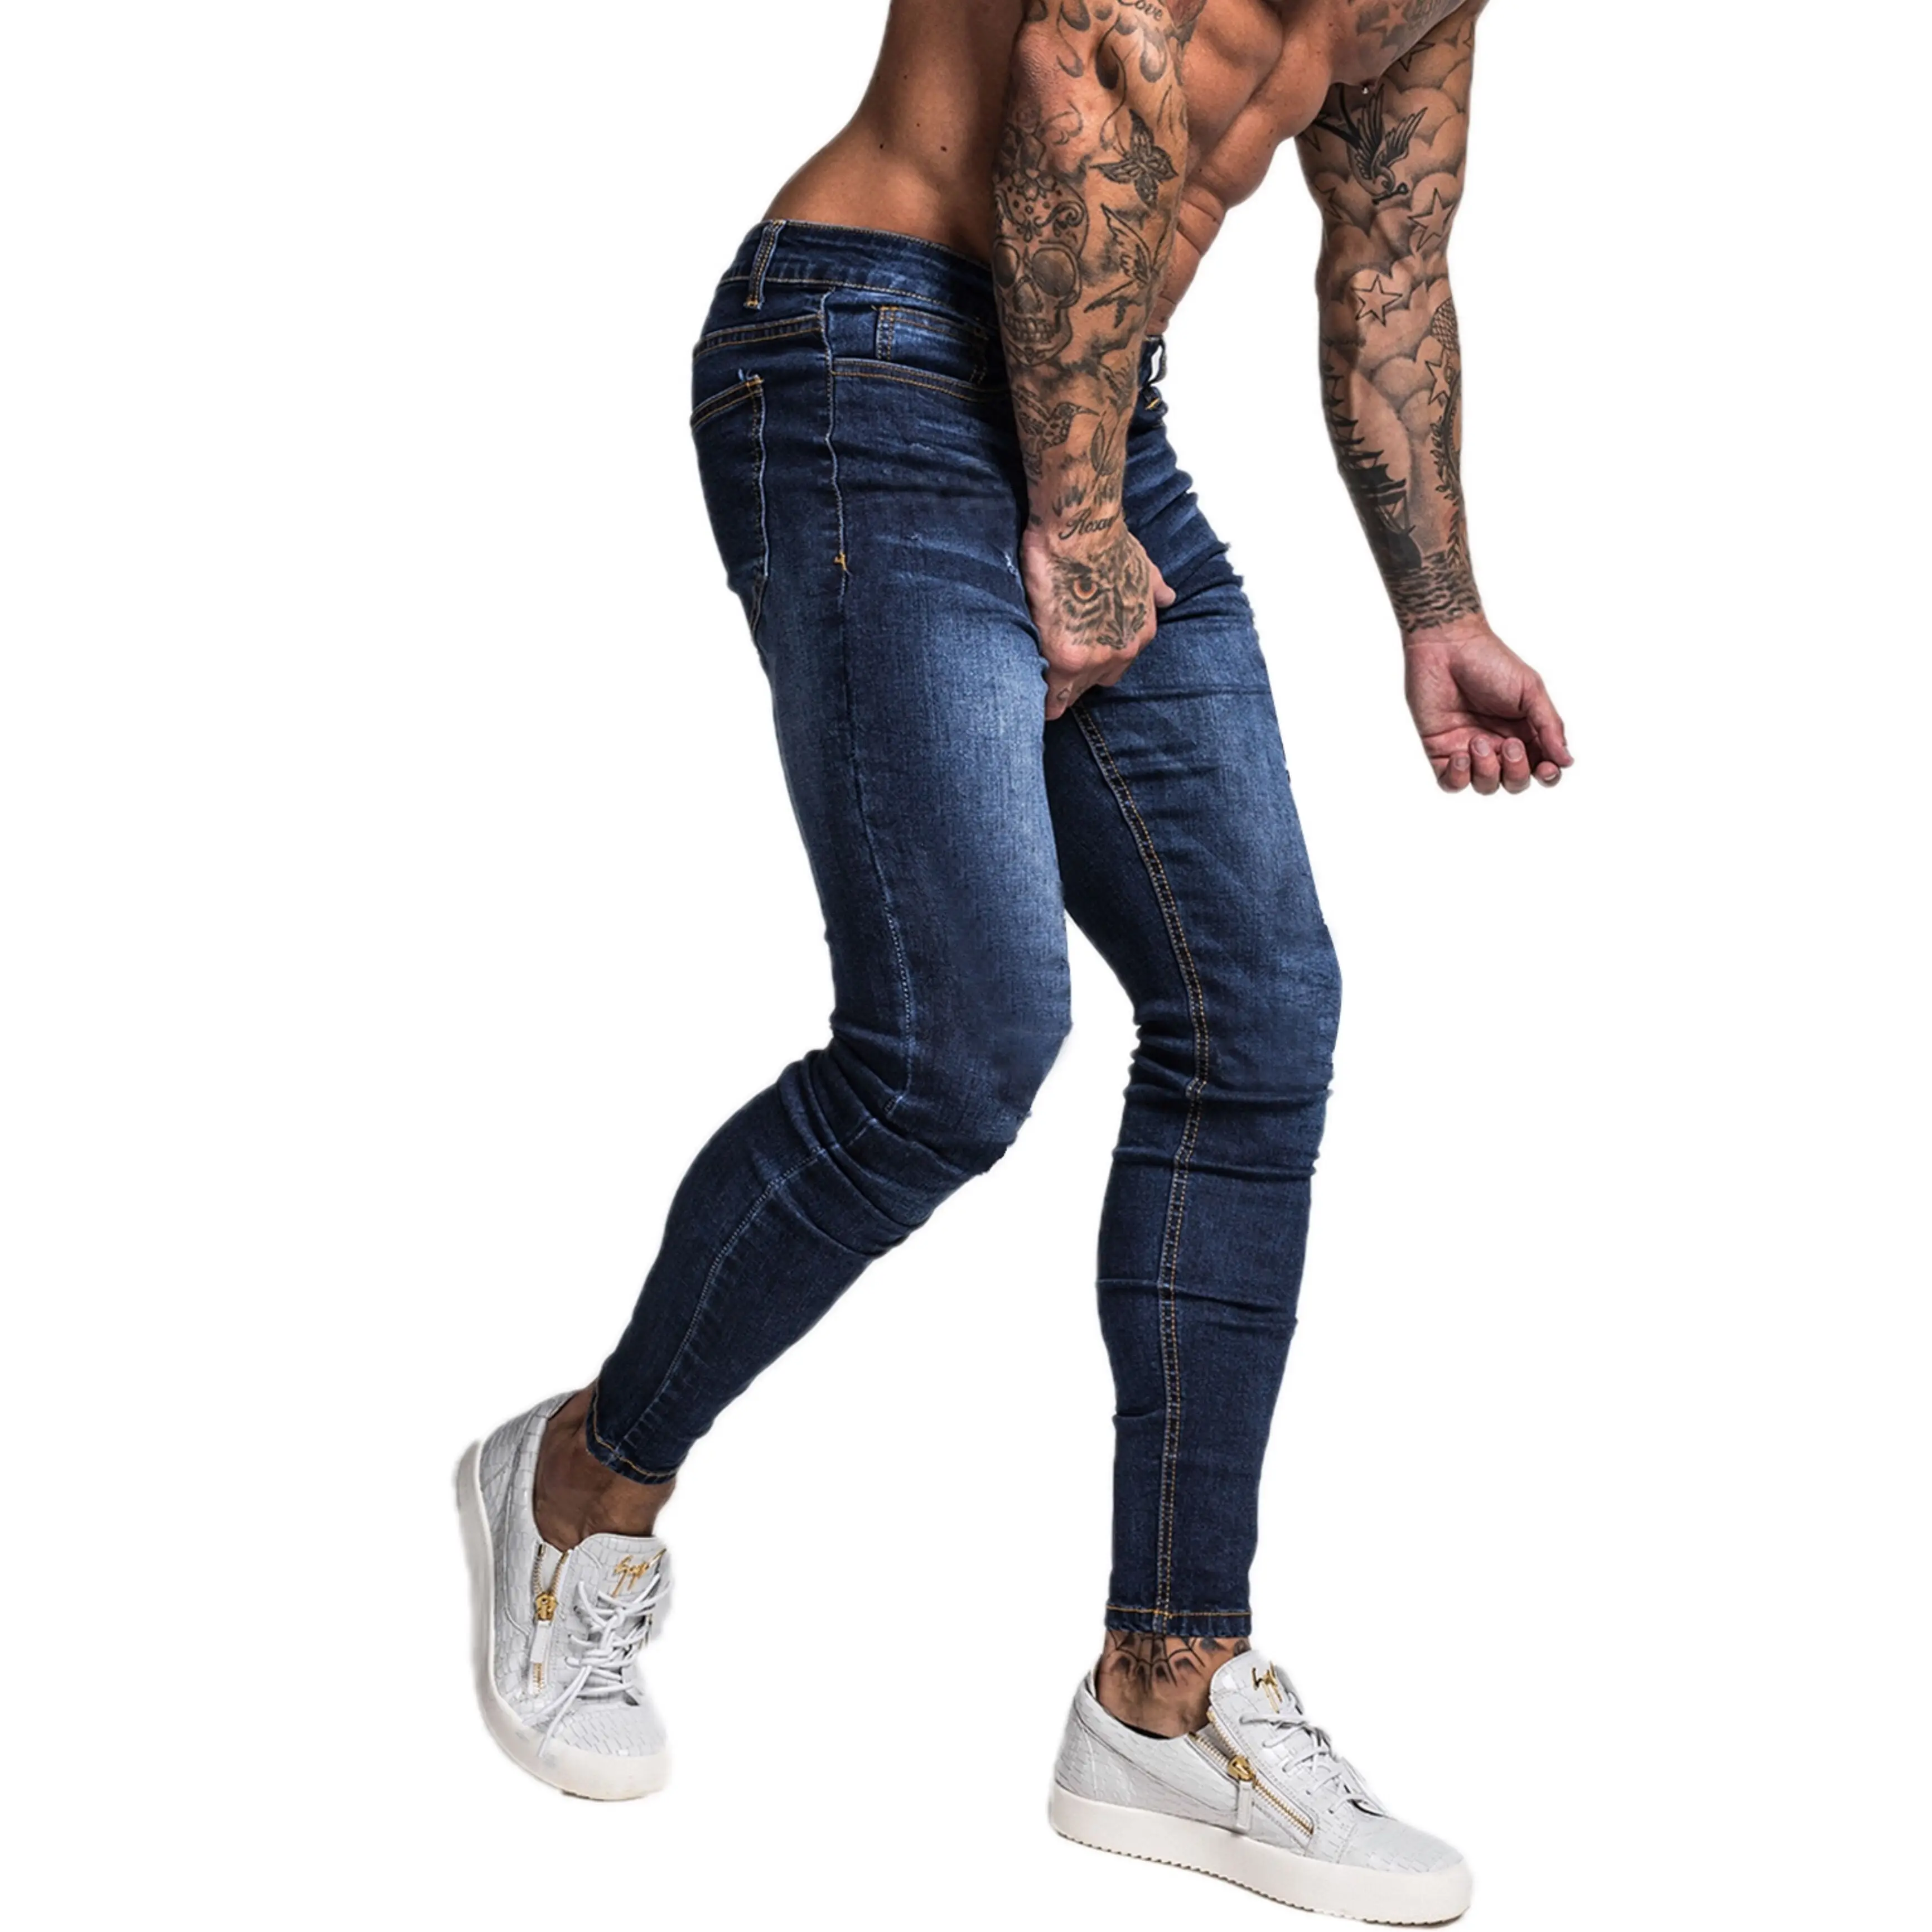 Prekės Džinsai Vyrų Slim Fit Super Skinny Džinsai Vyrams Hip-Hop Street Dėvėti Liesas Kojų Mados Stretch Kelnės 3